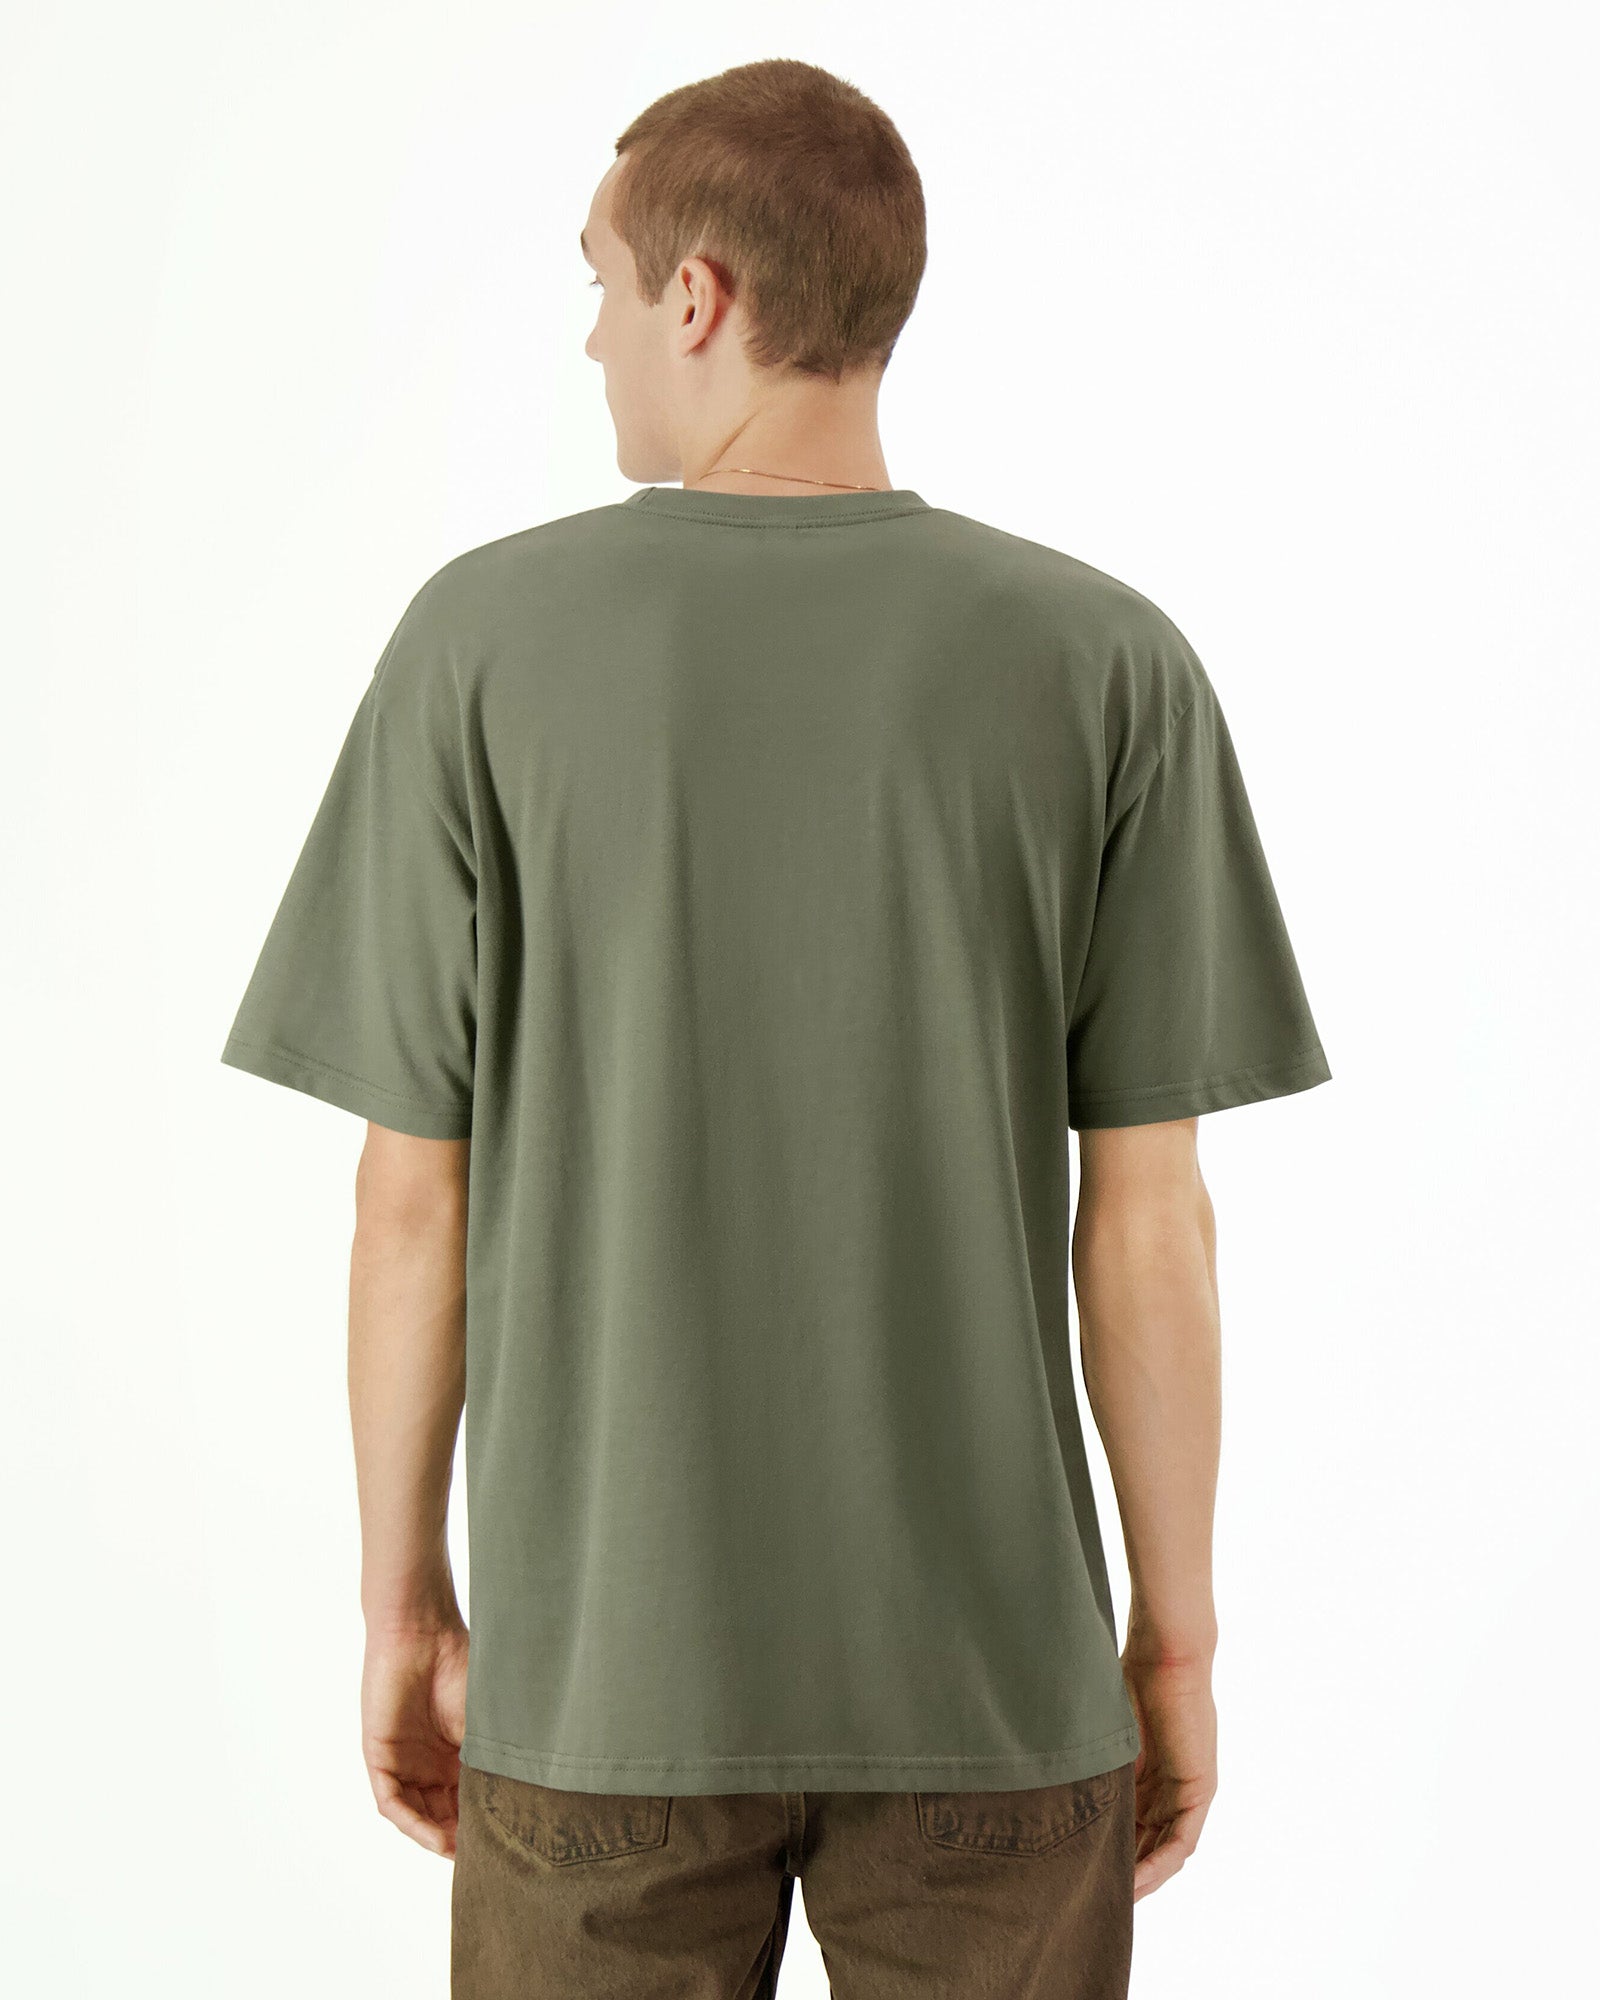 Sueded Unisex Short Sleeve T-shirt - Lieutenant